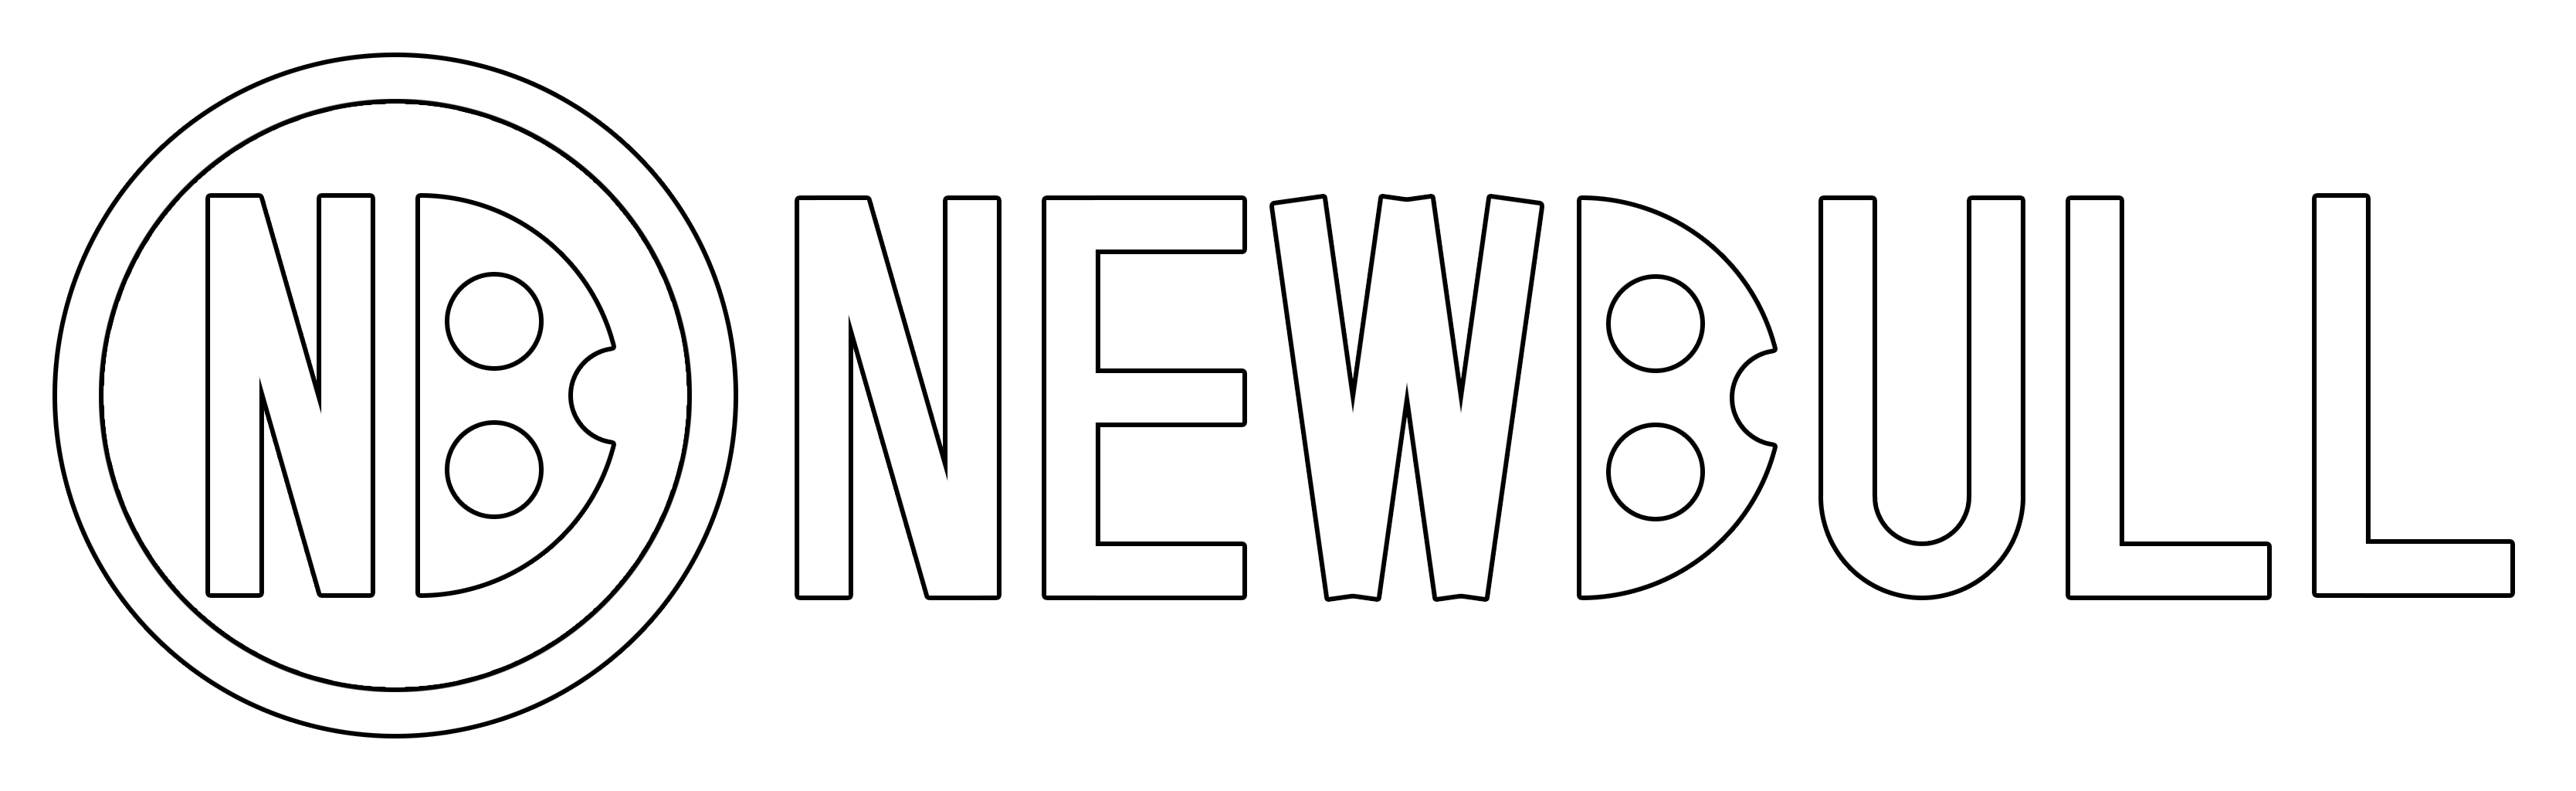 NewBull Logo PNG